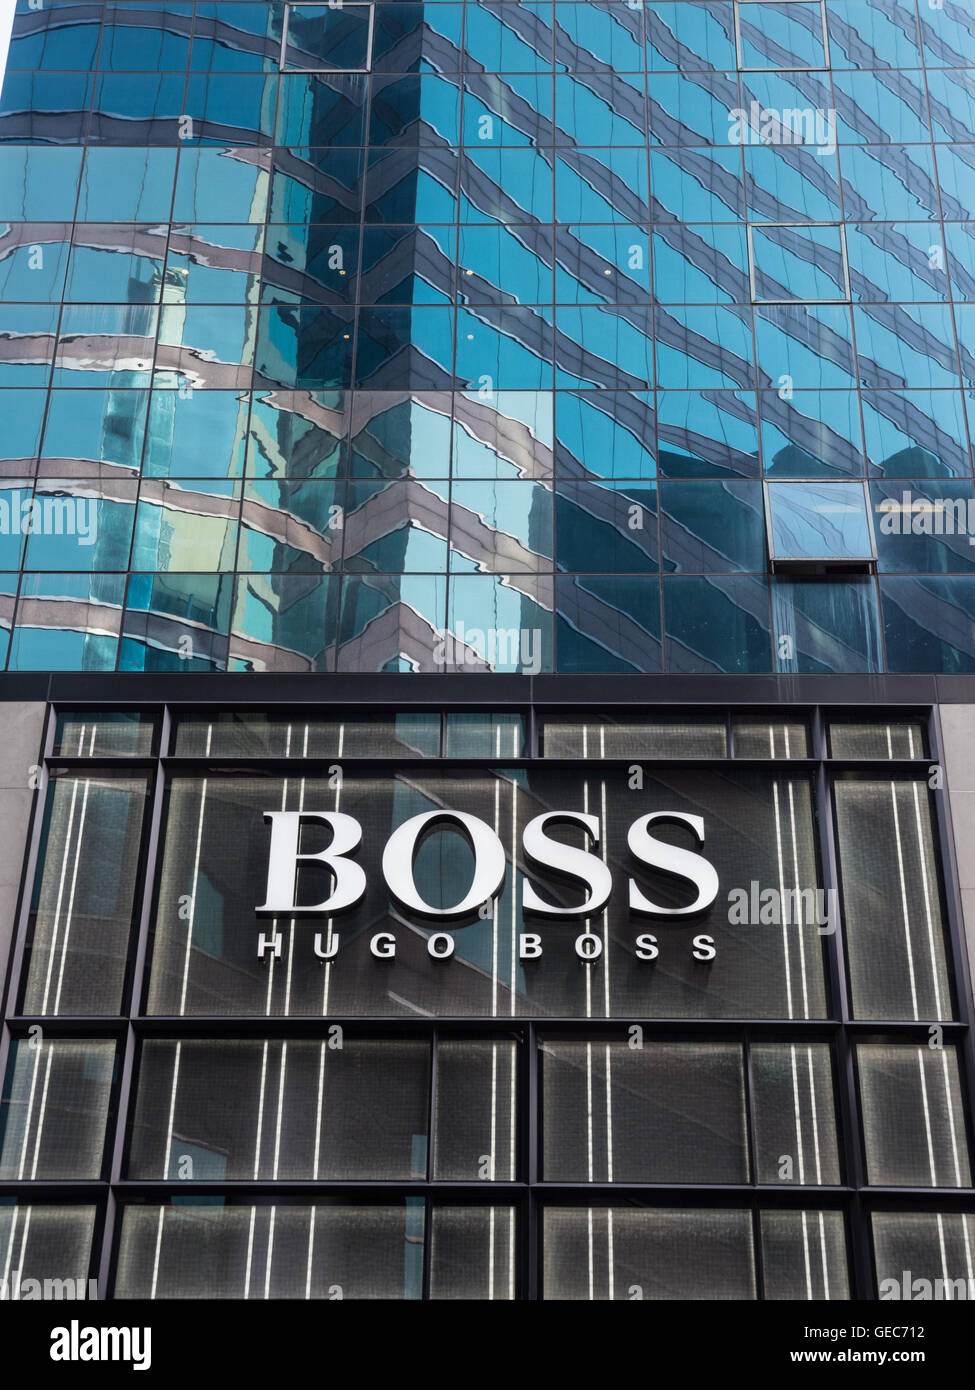 Hugo Boss designer shop sign on high rise glass clad building in ...